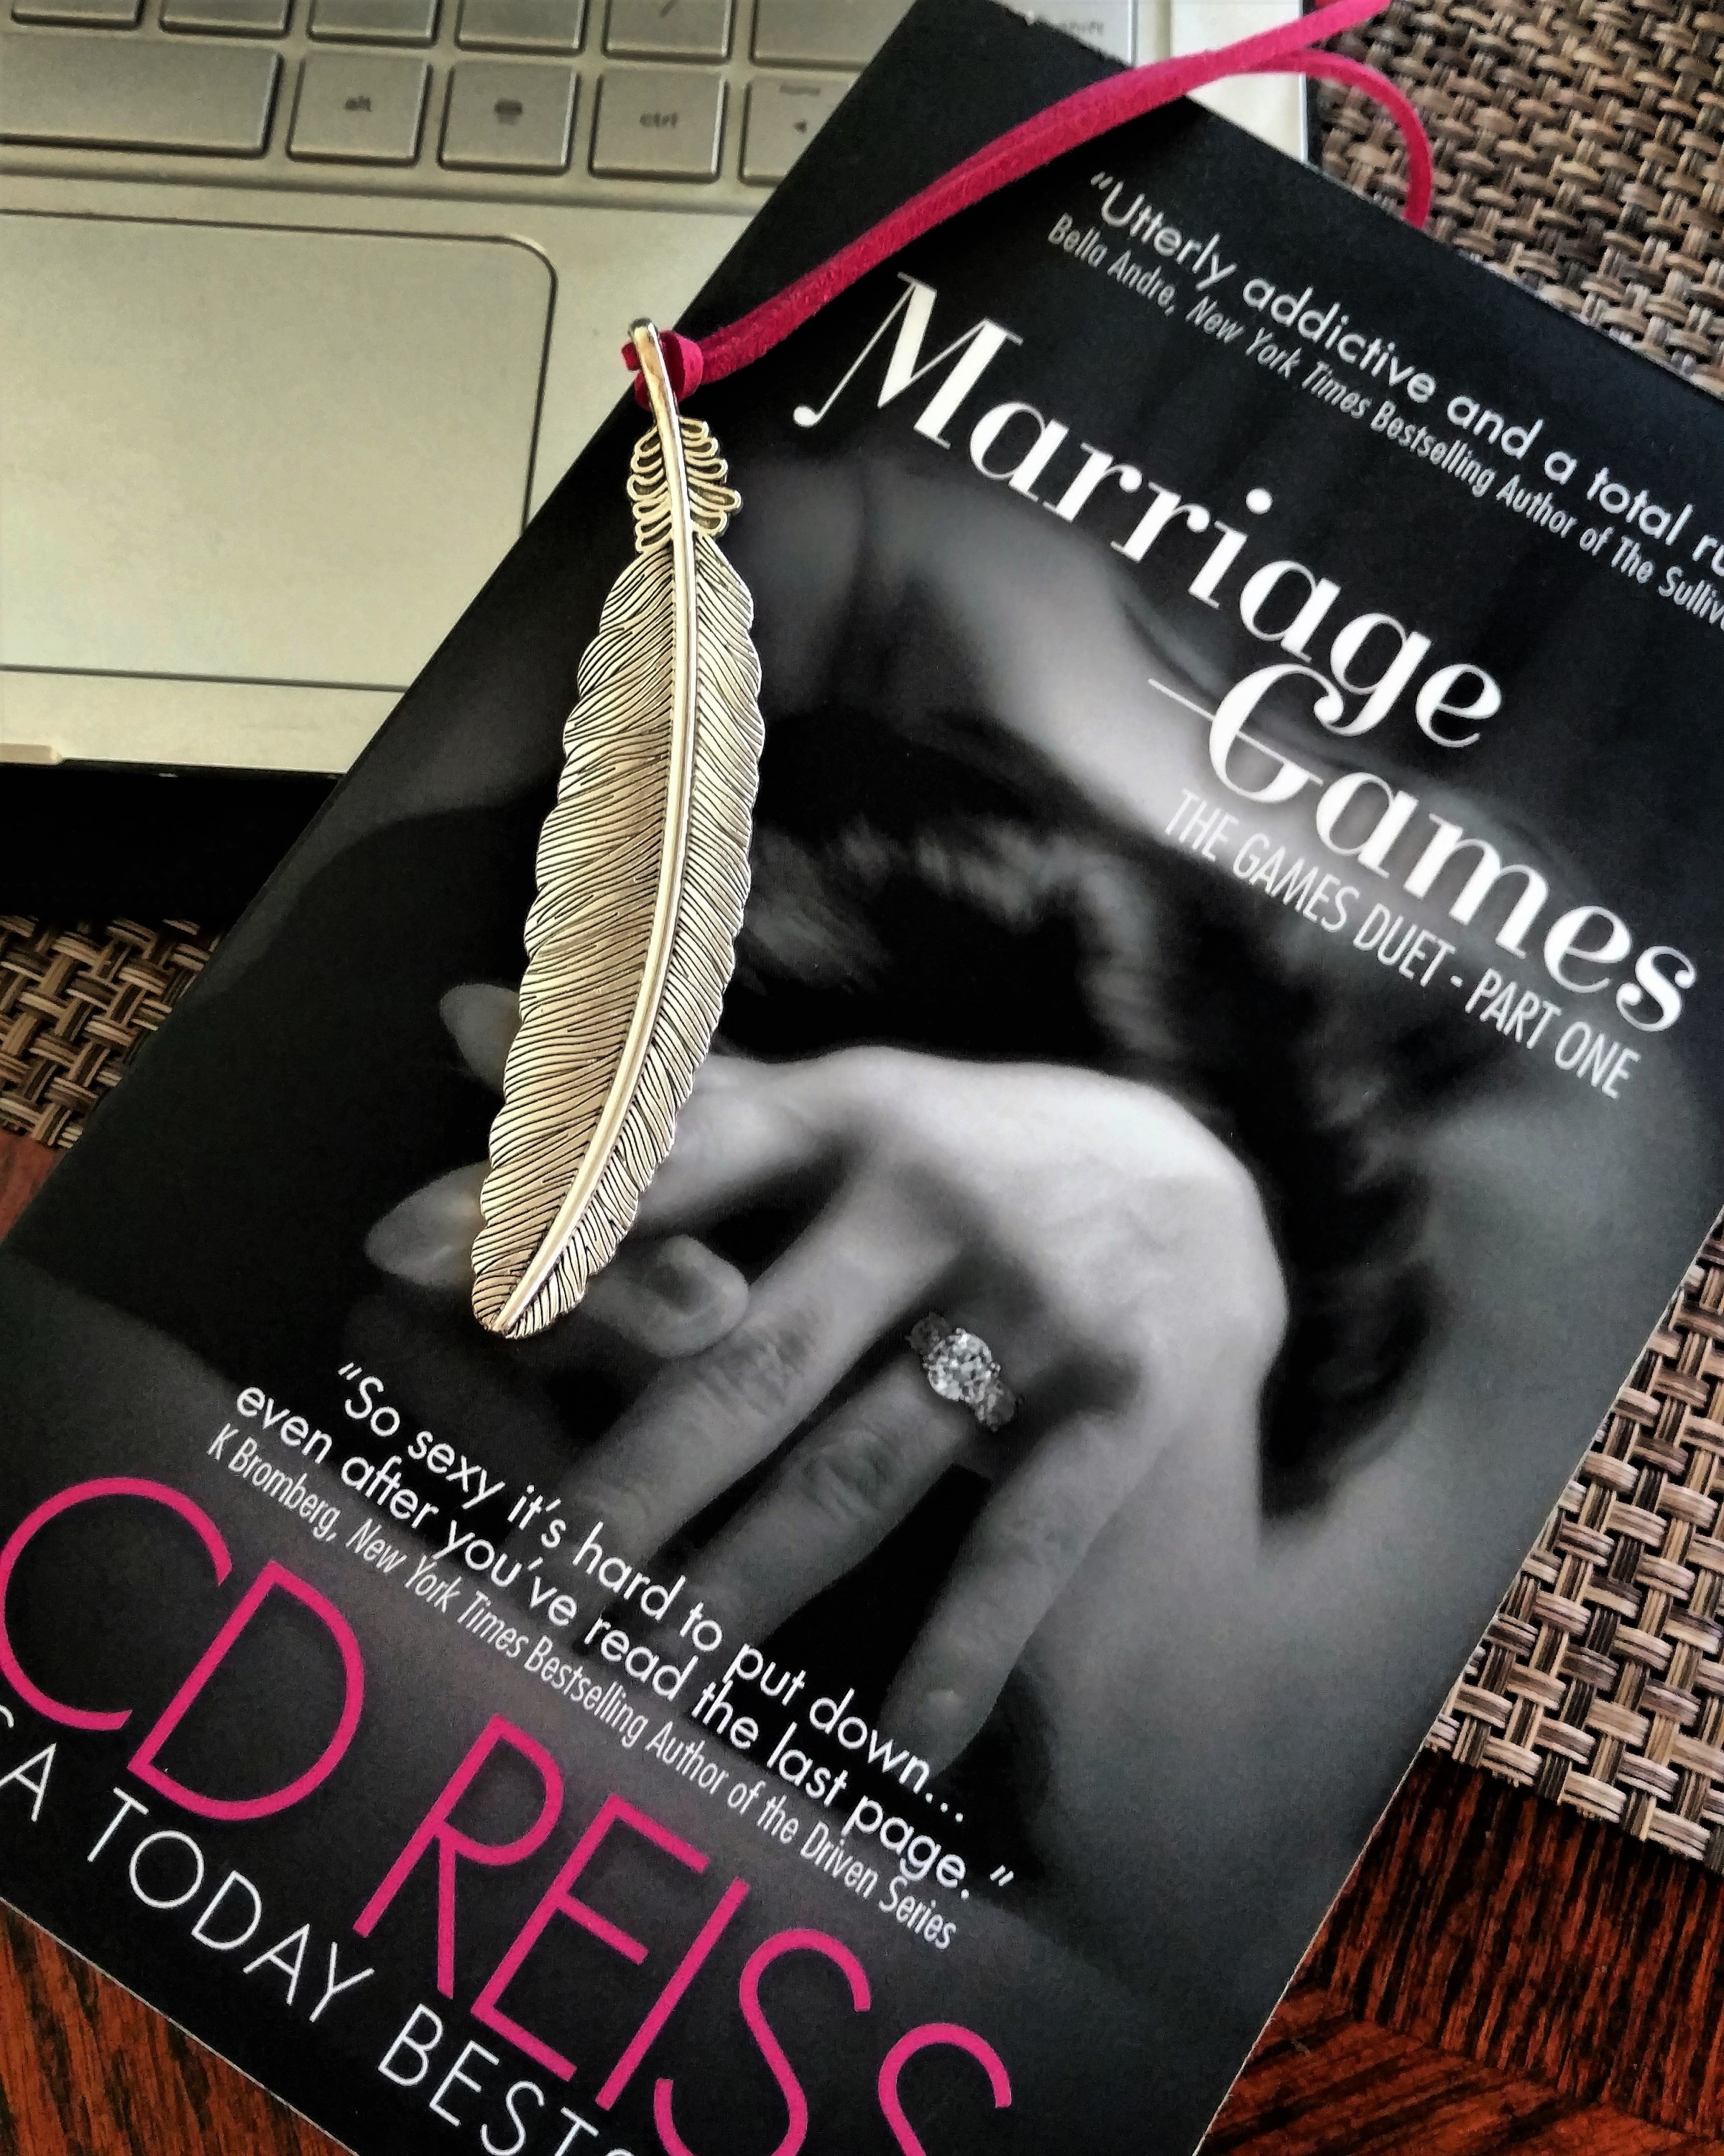 Marriage Games, CD Reiss, BDSM Books, Dark Romance, Book Review